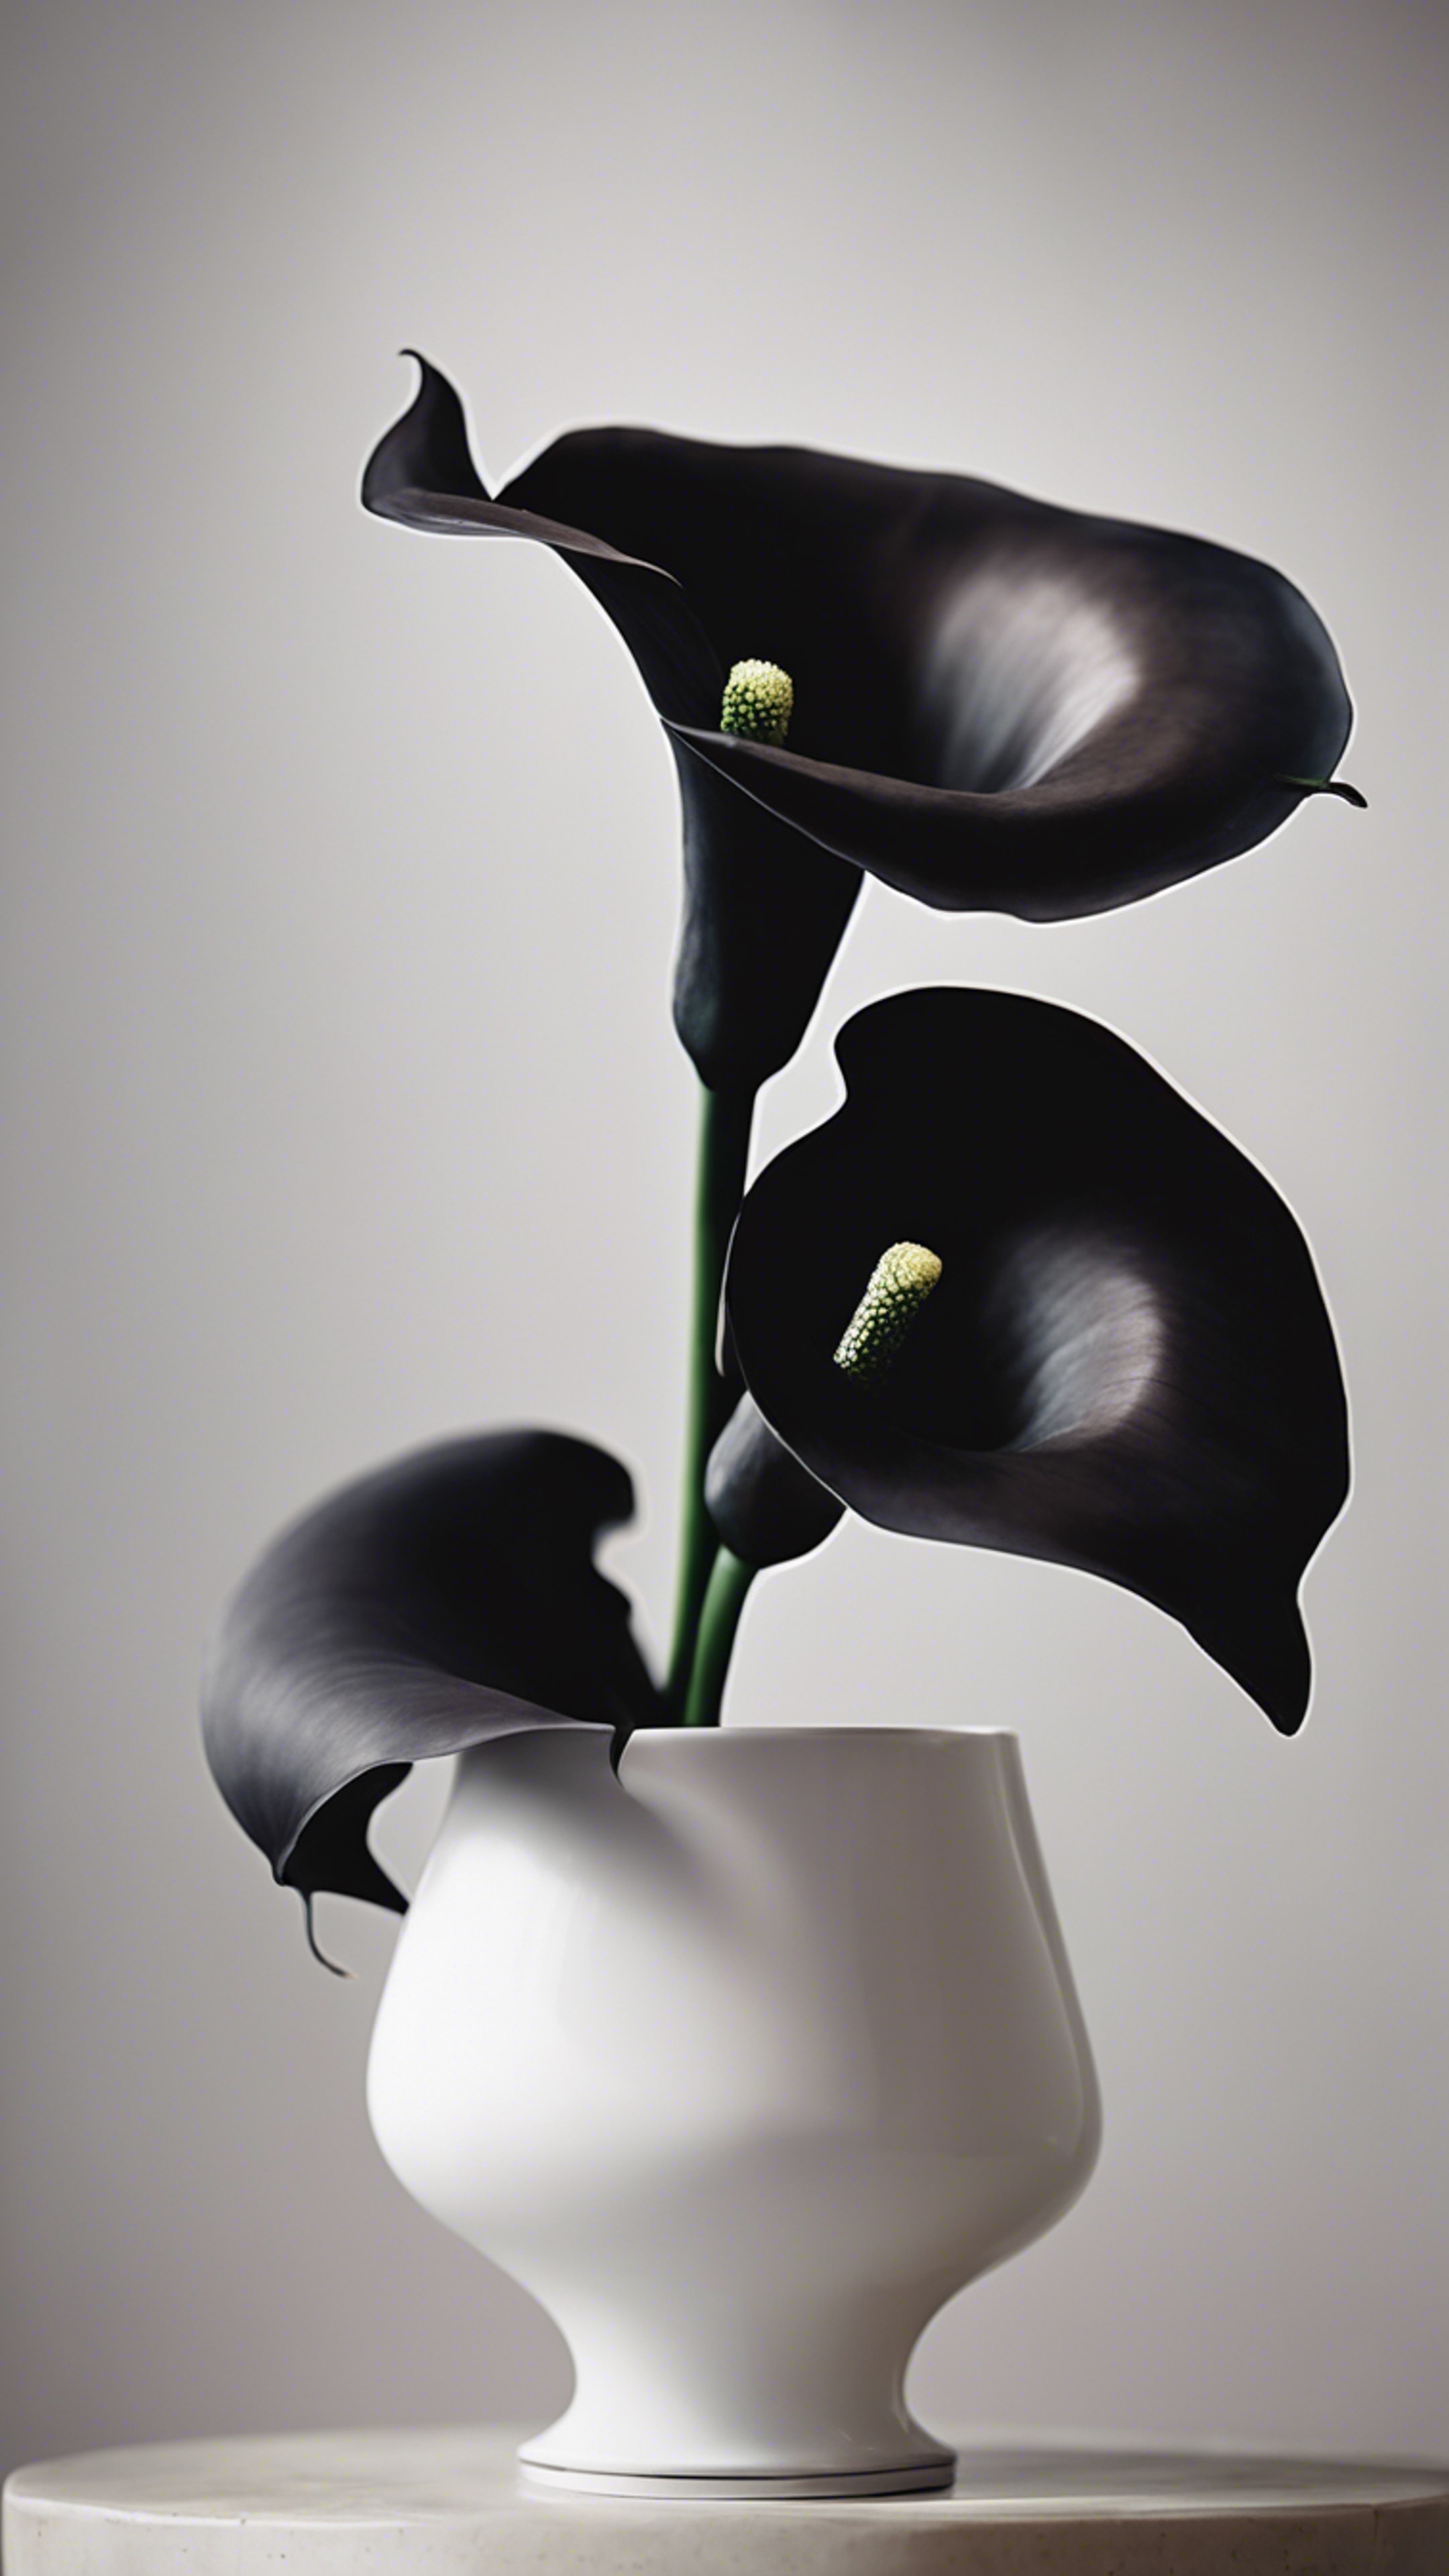 A breathtaking centerpiece featuring a black calla lily in a modern white vase.壁紙[9d5d01b6790e4db4a8d5]